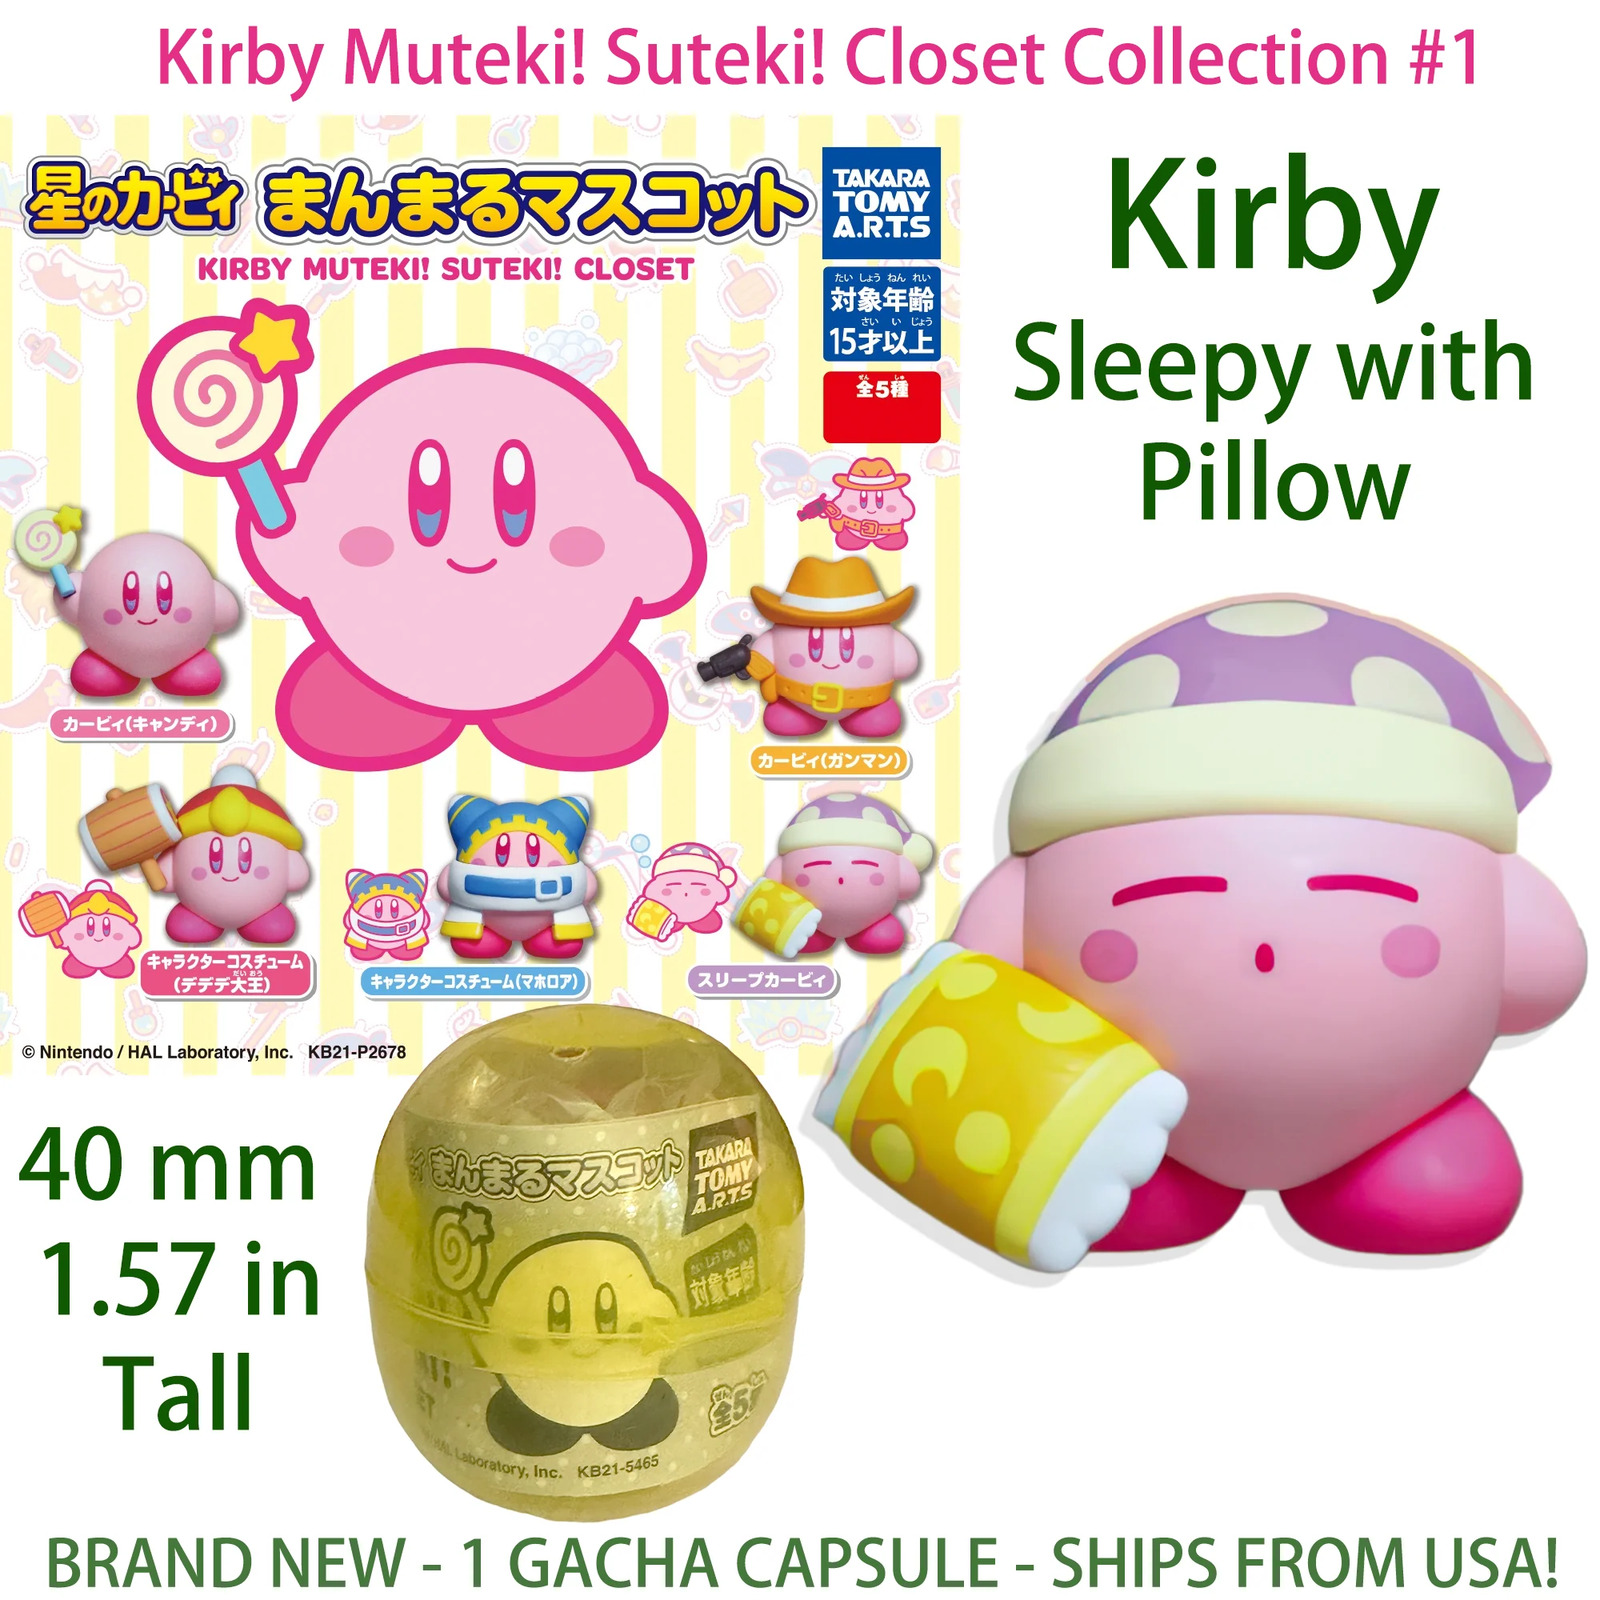 SLEEPY KIRBY WITH PILLOW - KIRBY'S SUTEKI MUTEKI Gashapon Capsule Figure (NEW)